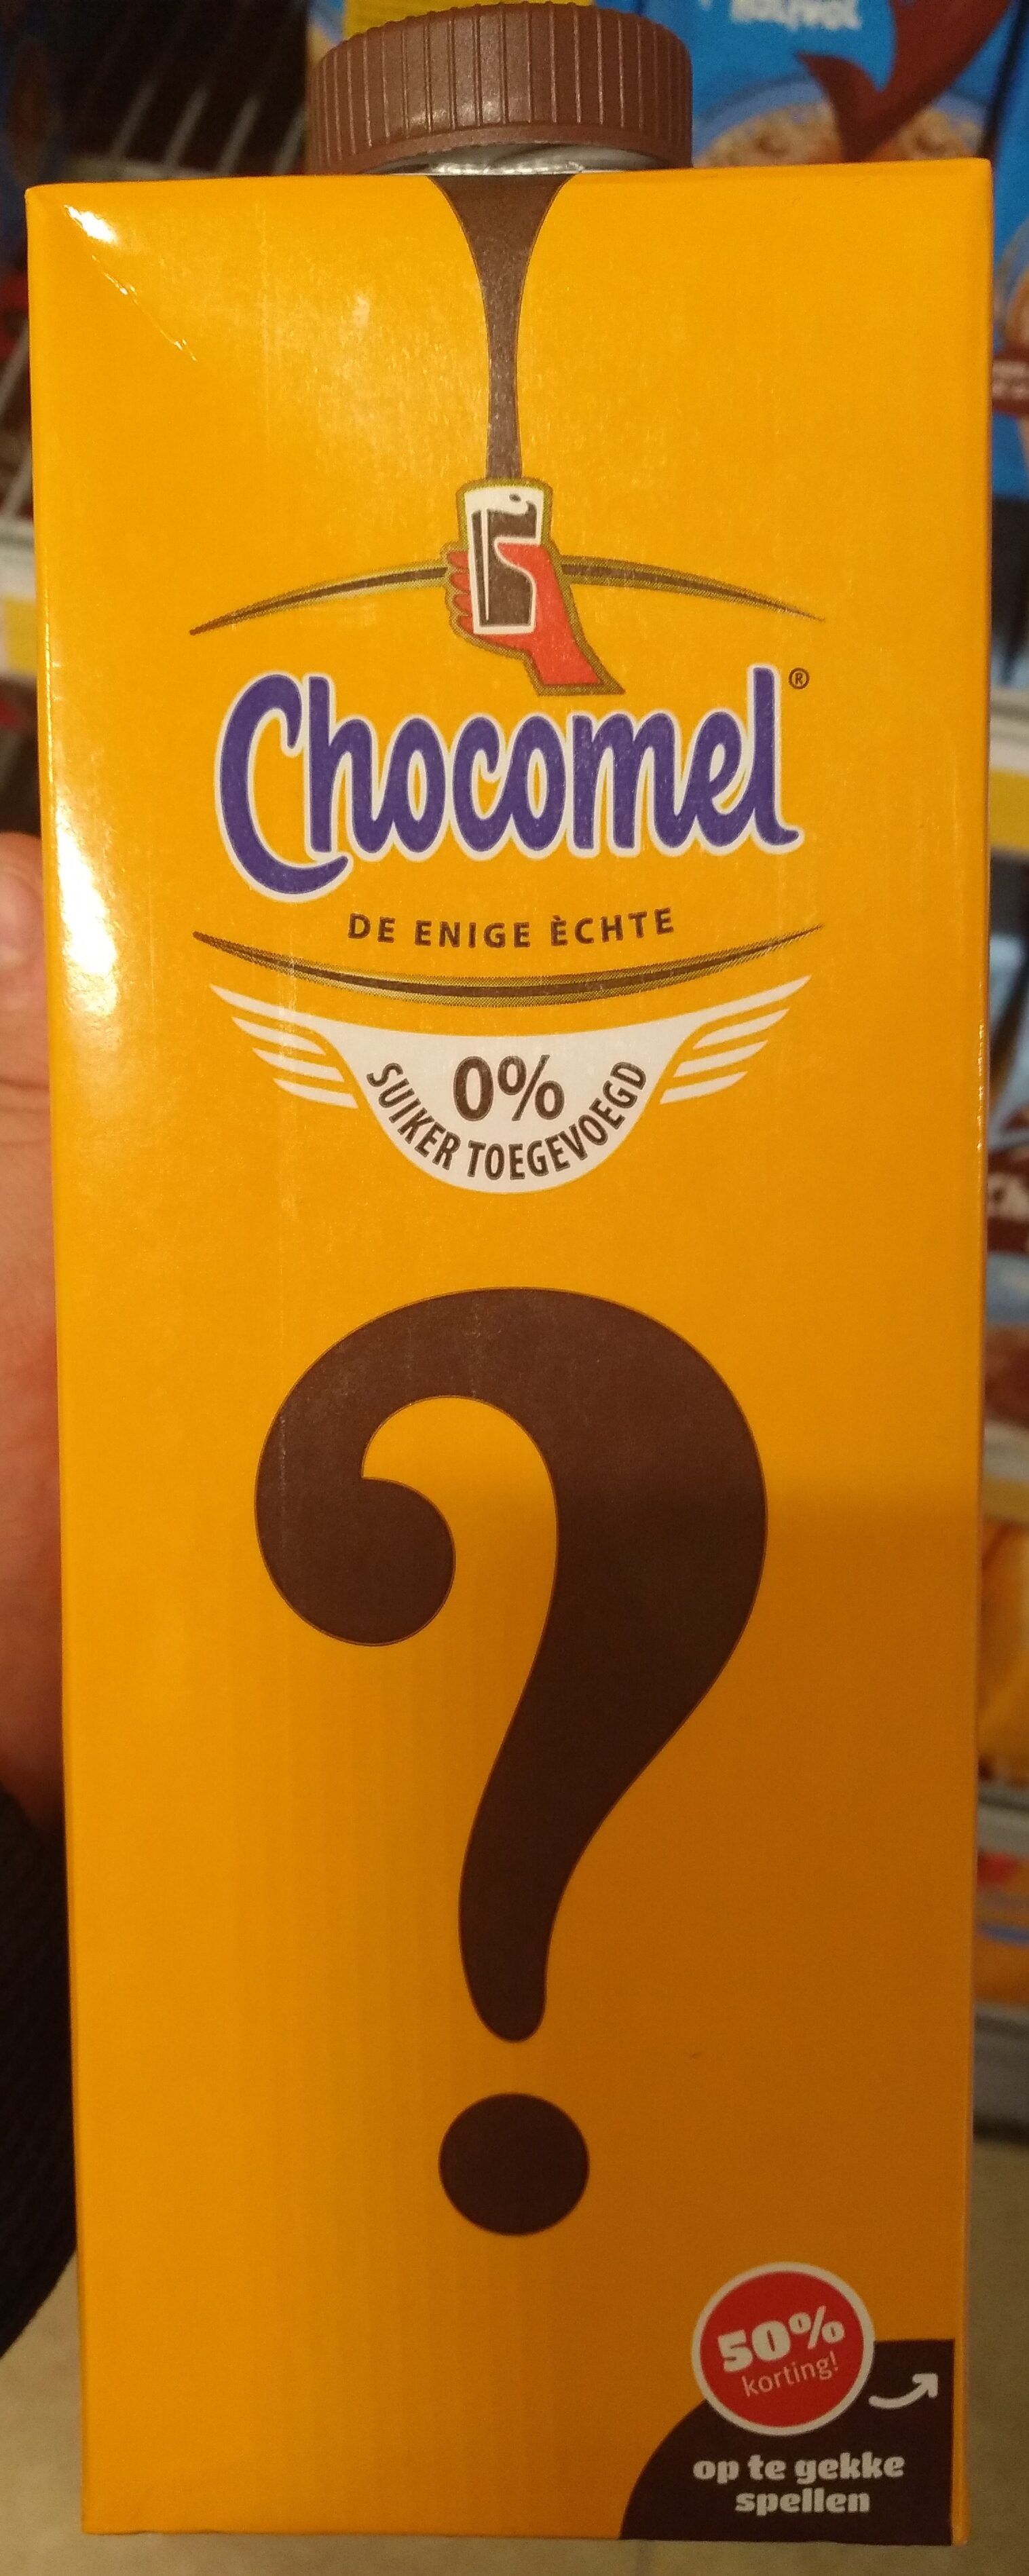 Chocomel 0% suiker toegevoegd - Product